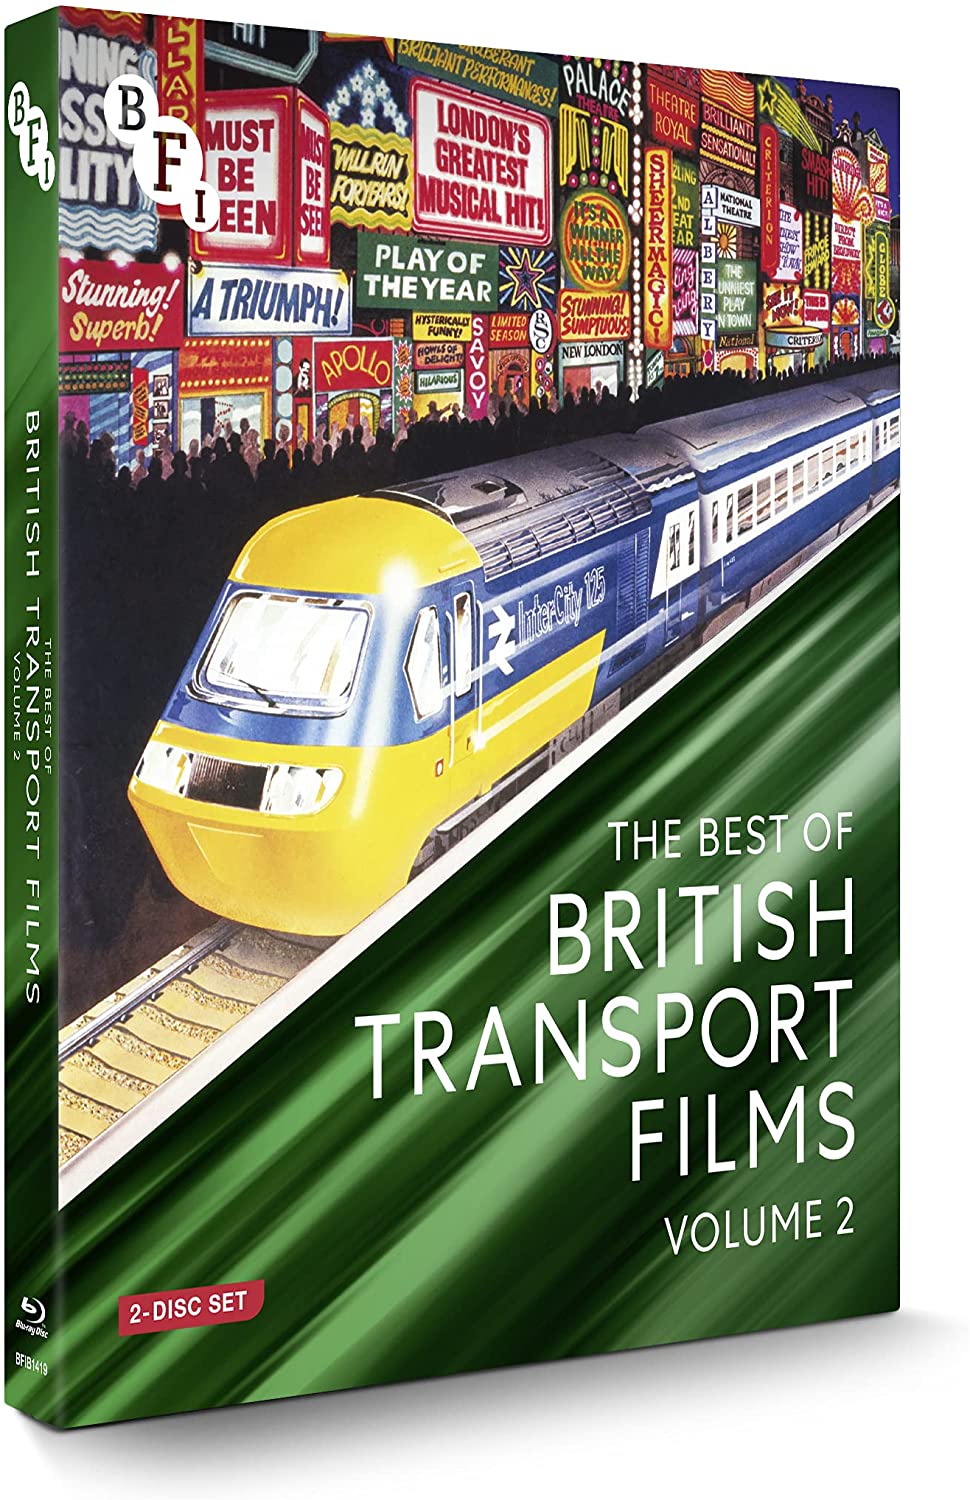 The Best of British Transport Films Volume 2 (2 discs) [Blu-ray]